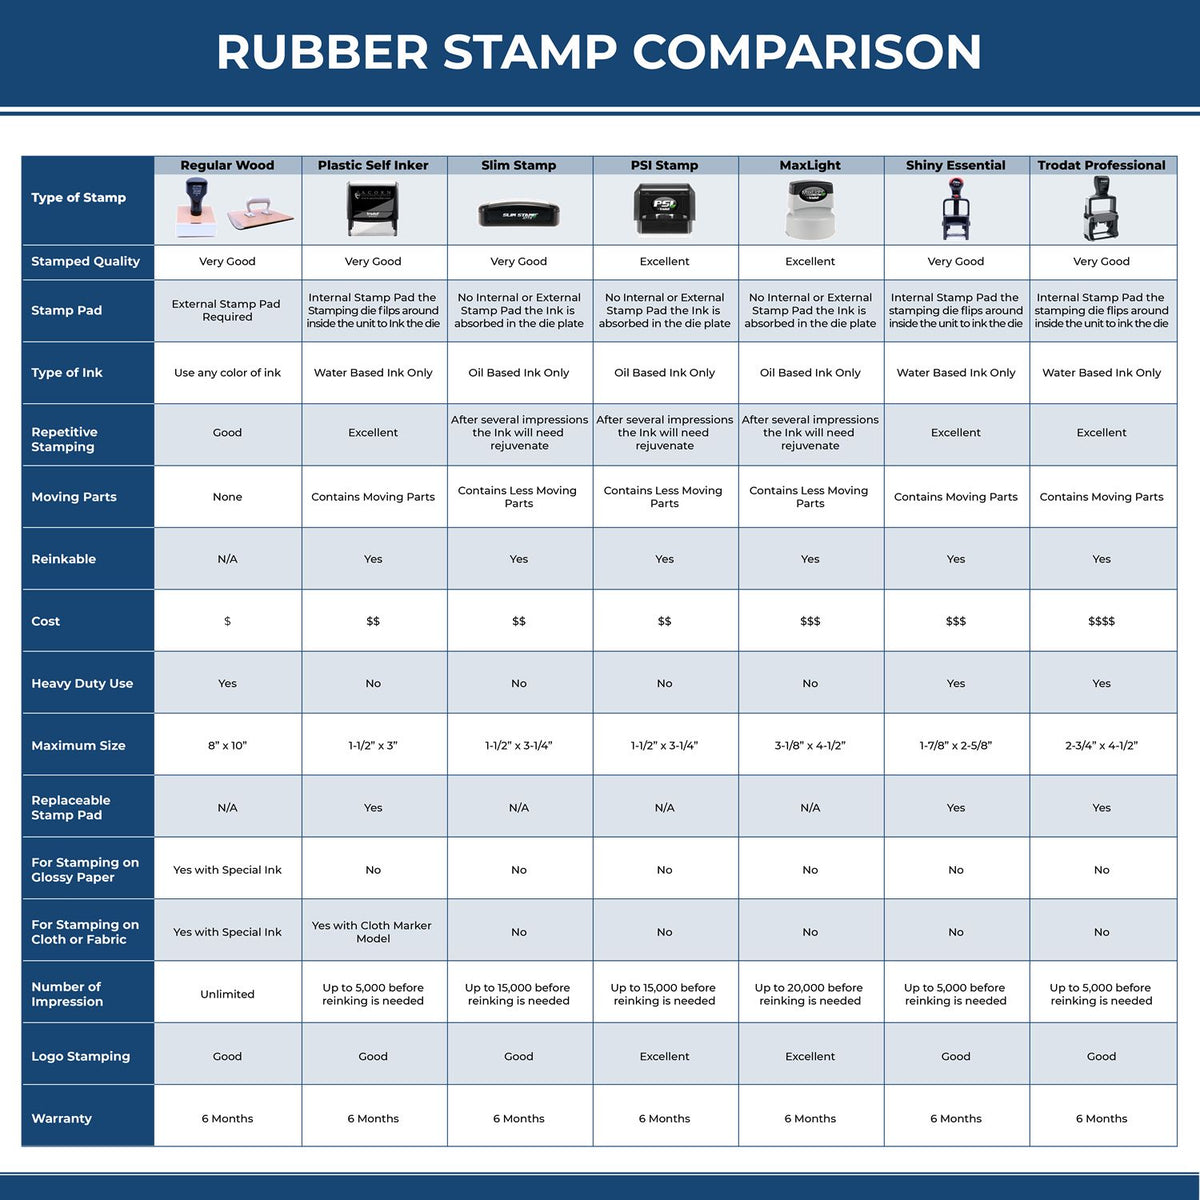 Large Return for Better Address Rubber Stamp 4970R Rubber Stamp Comparison